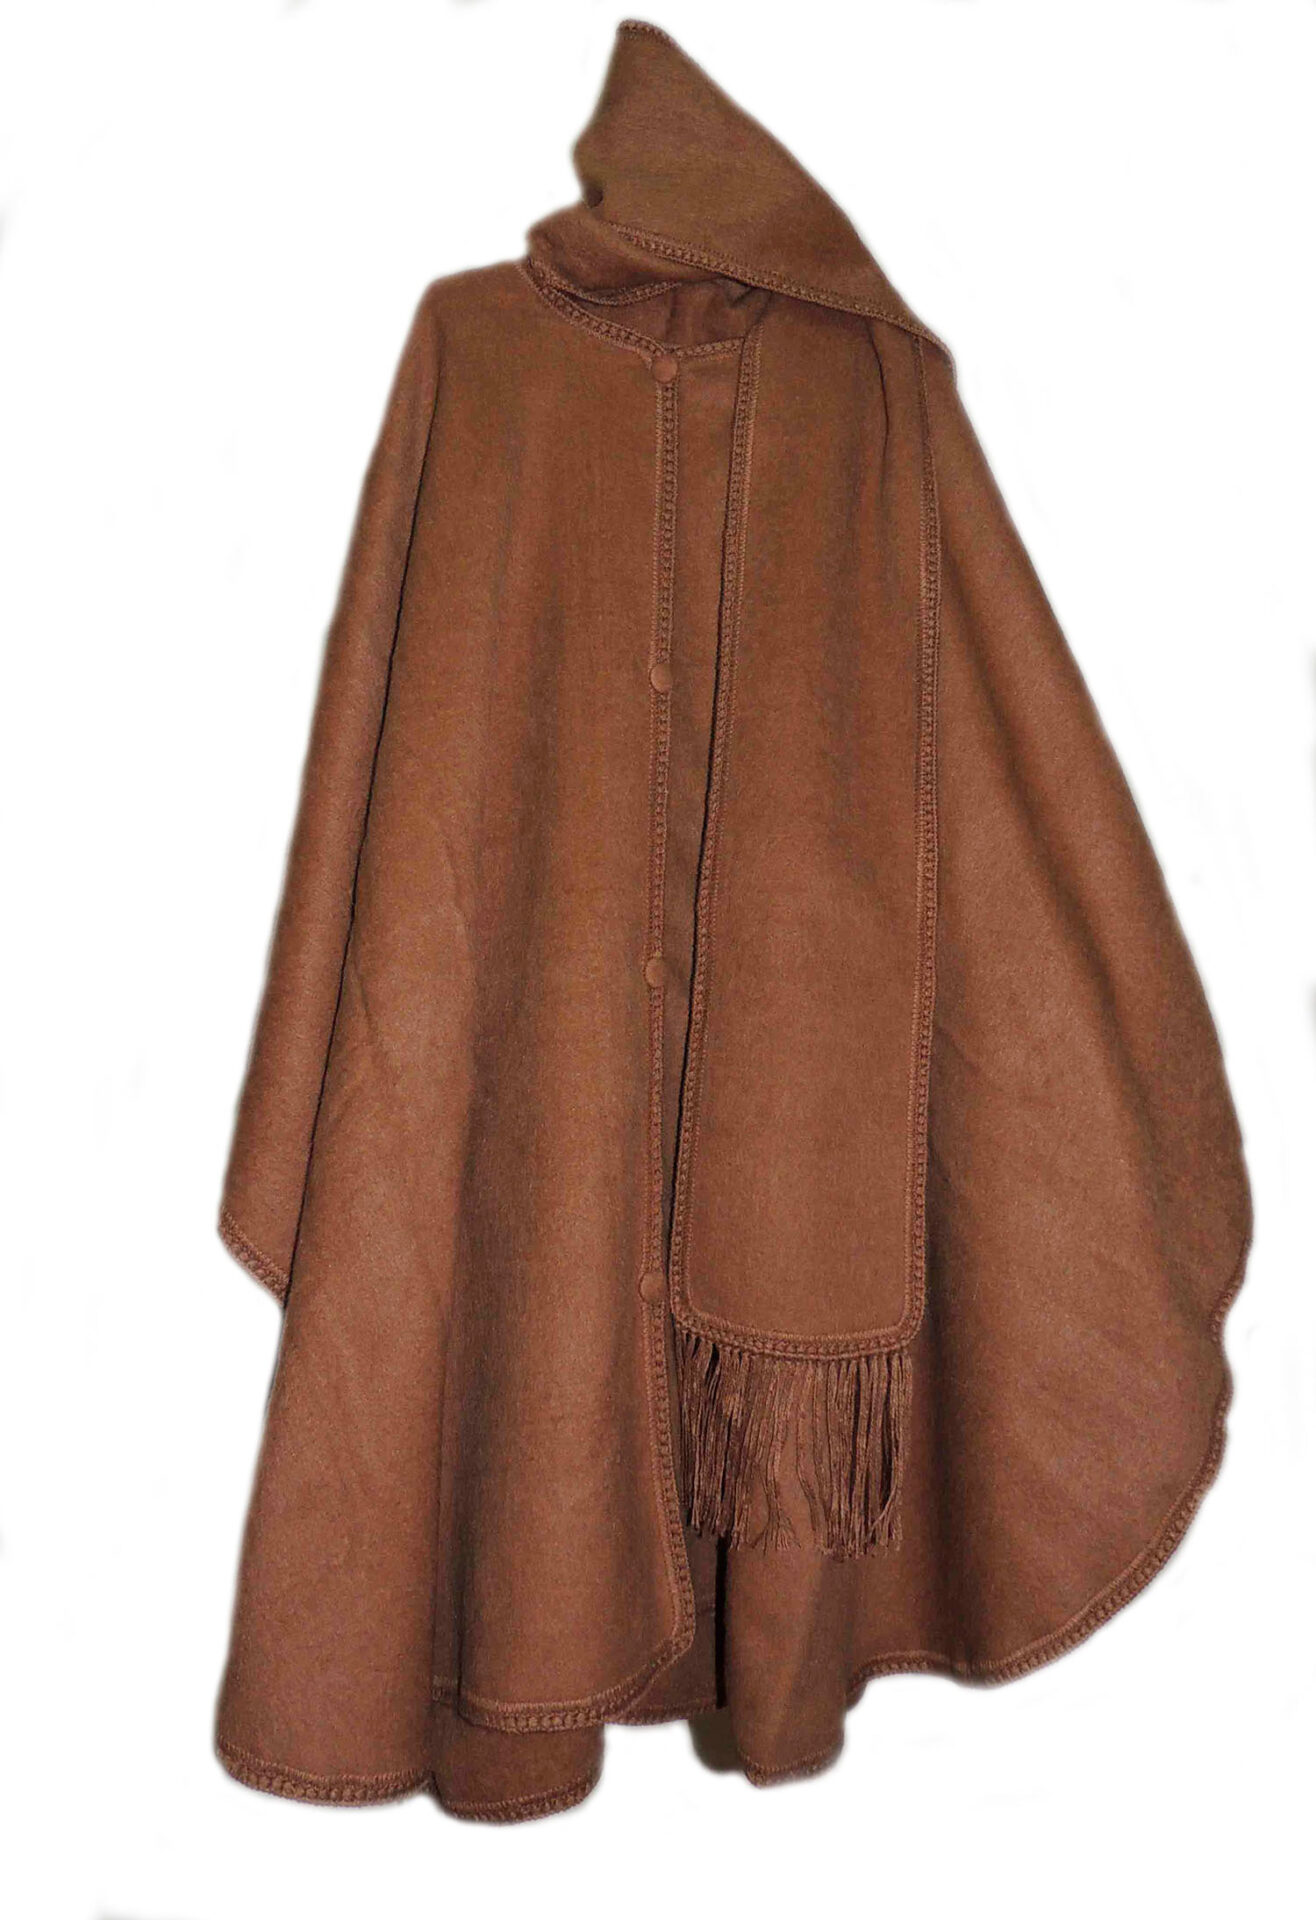 Classic cape/ poncho with shawl in alpaca.